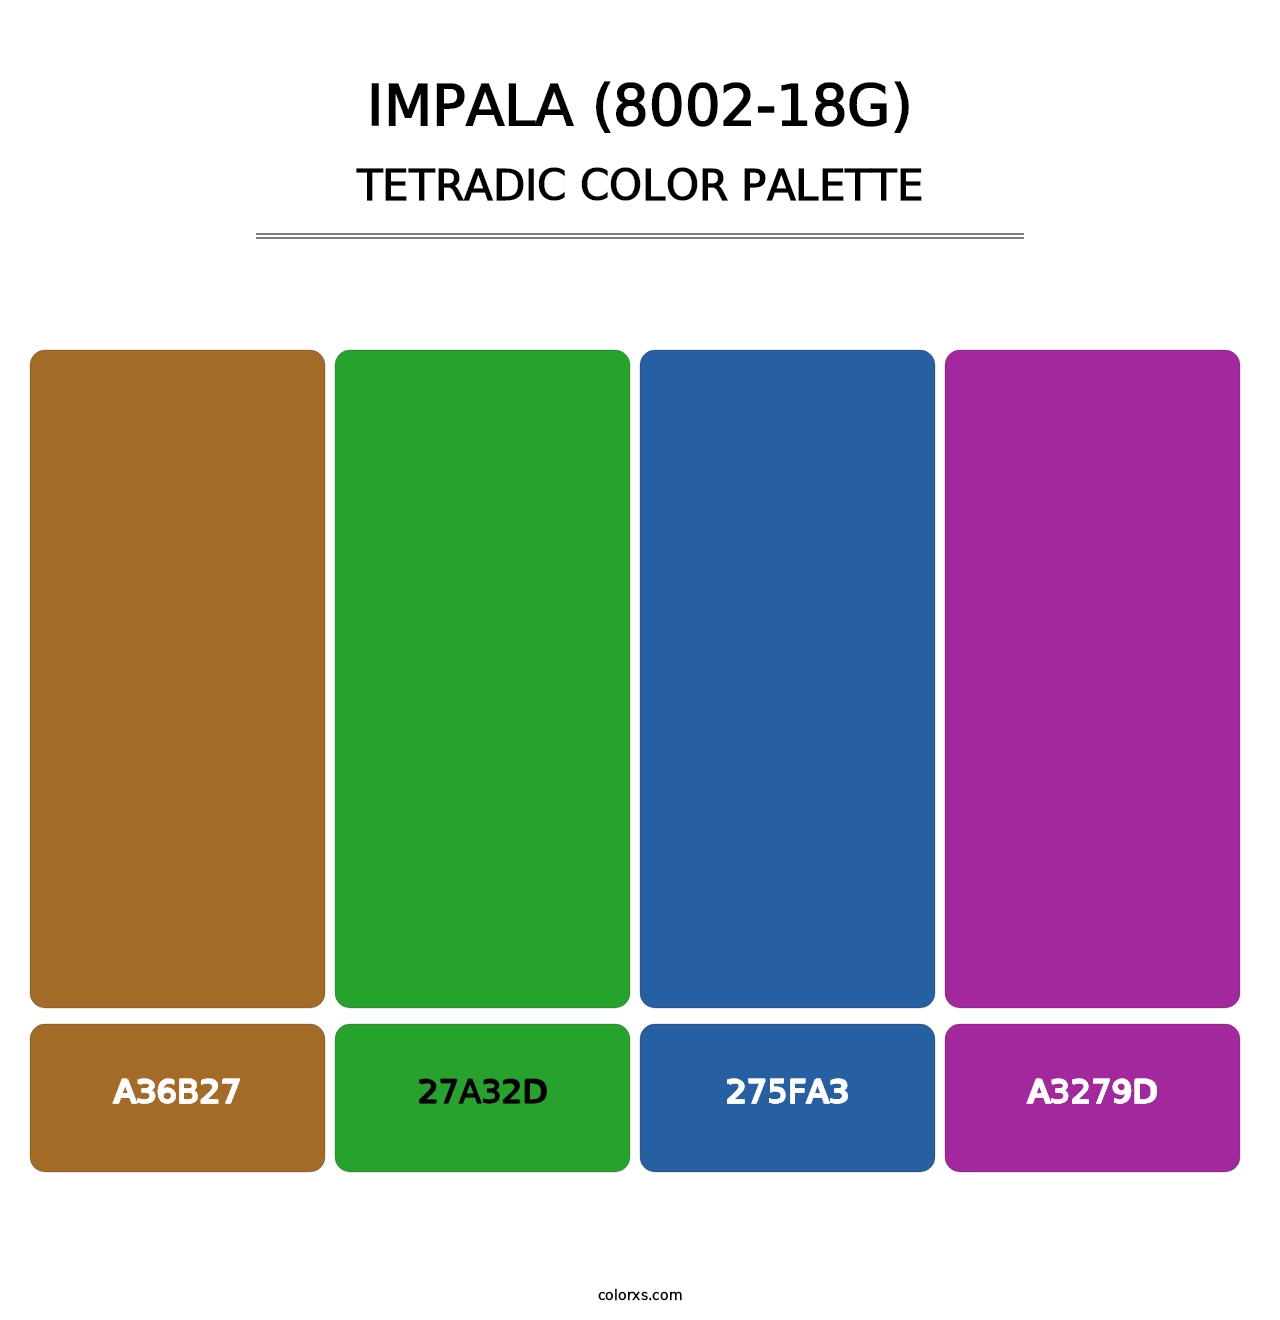 Impala (8002-18G) - Tetradic Color Palette